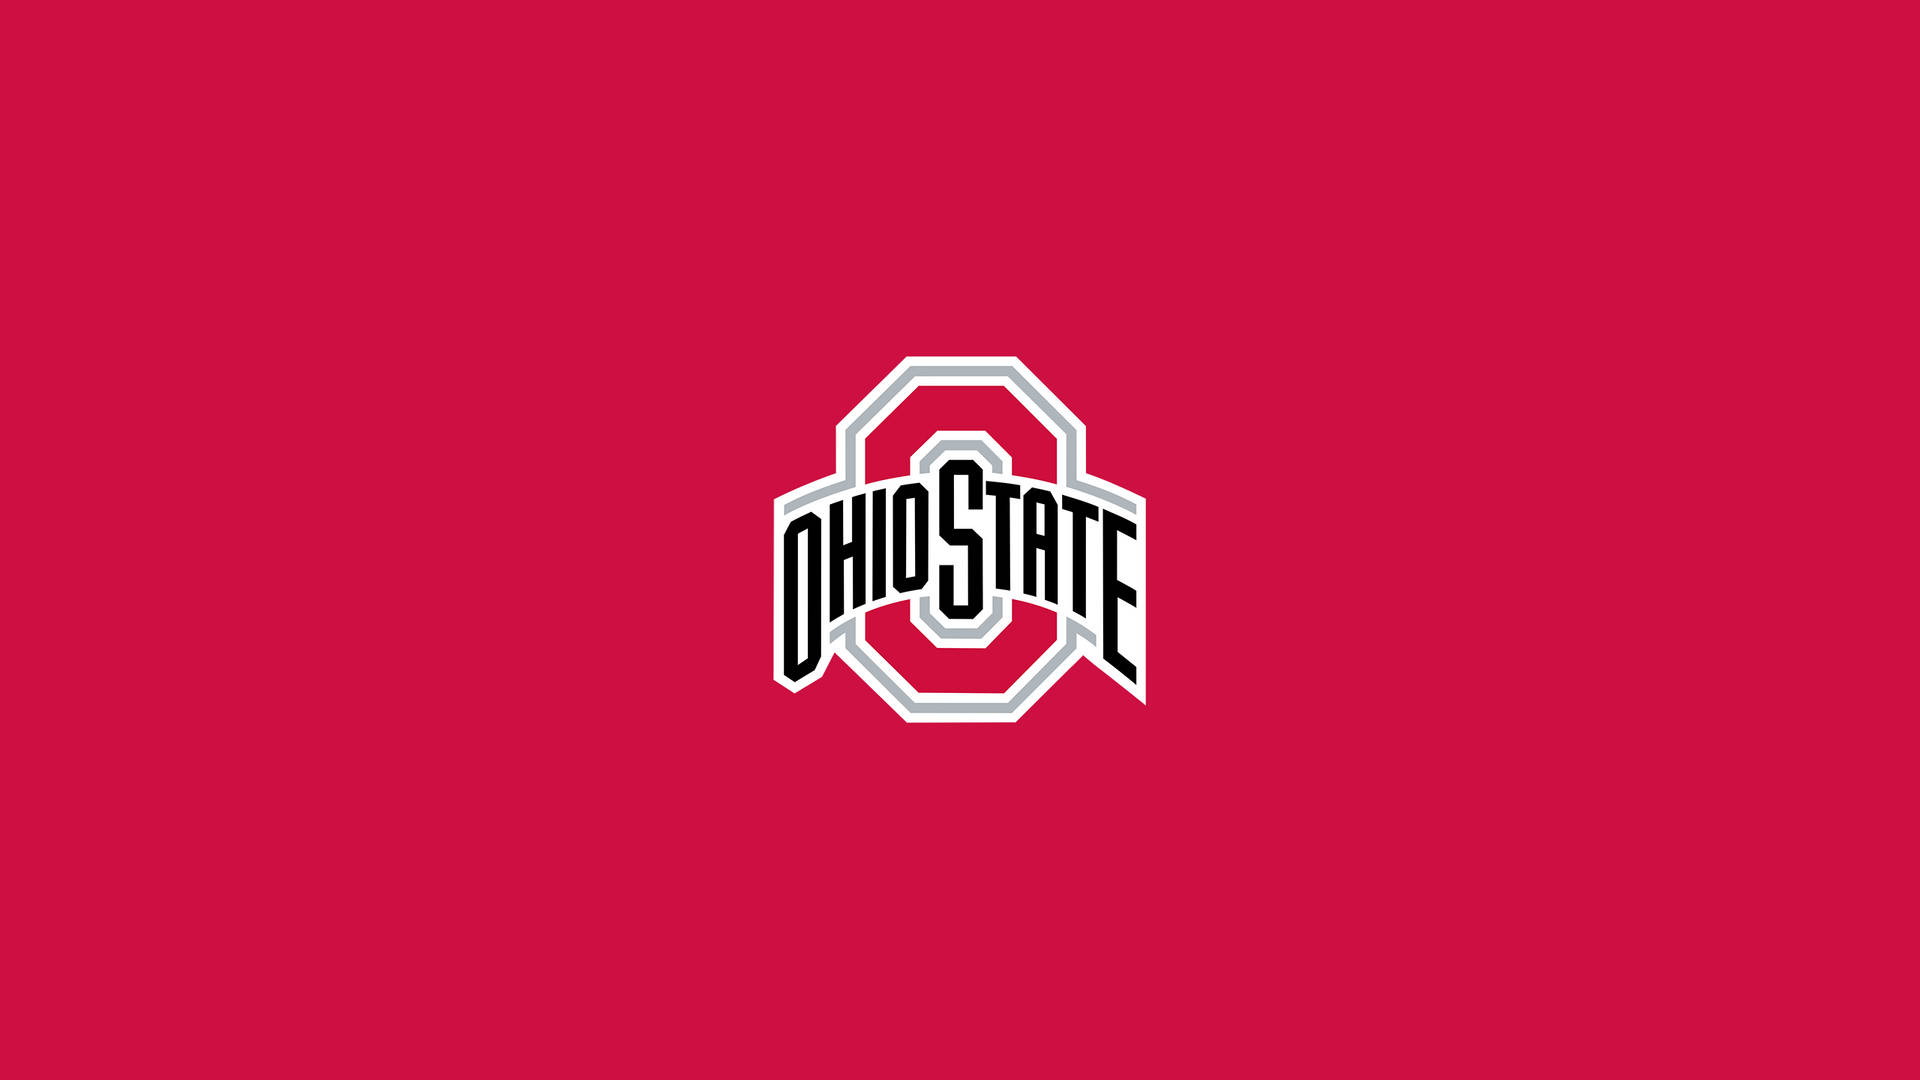 Ohio State University Plain Red Wallpaper